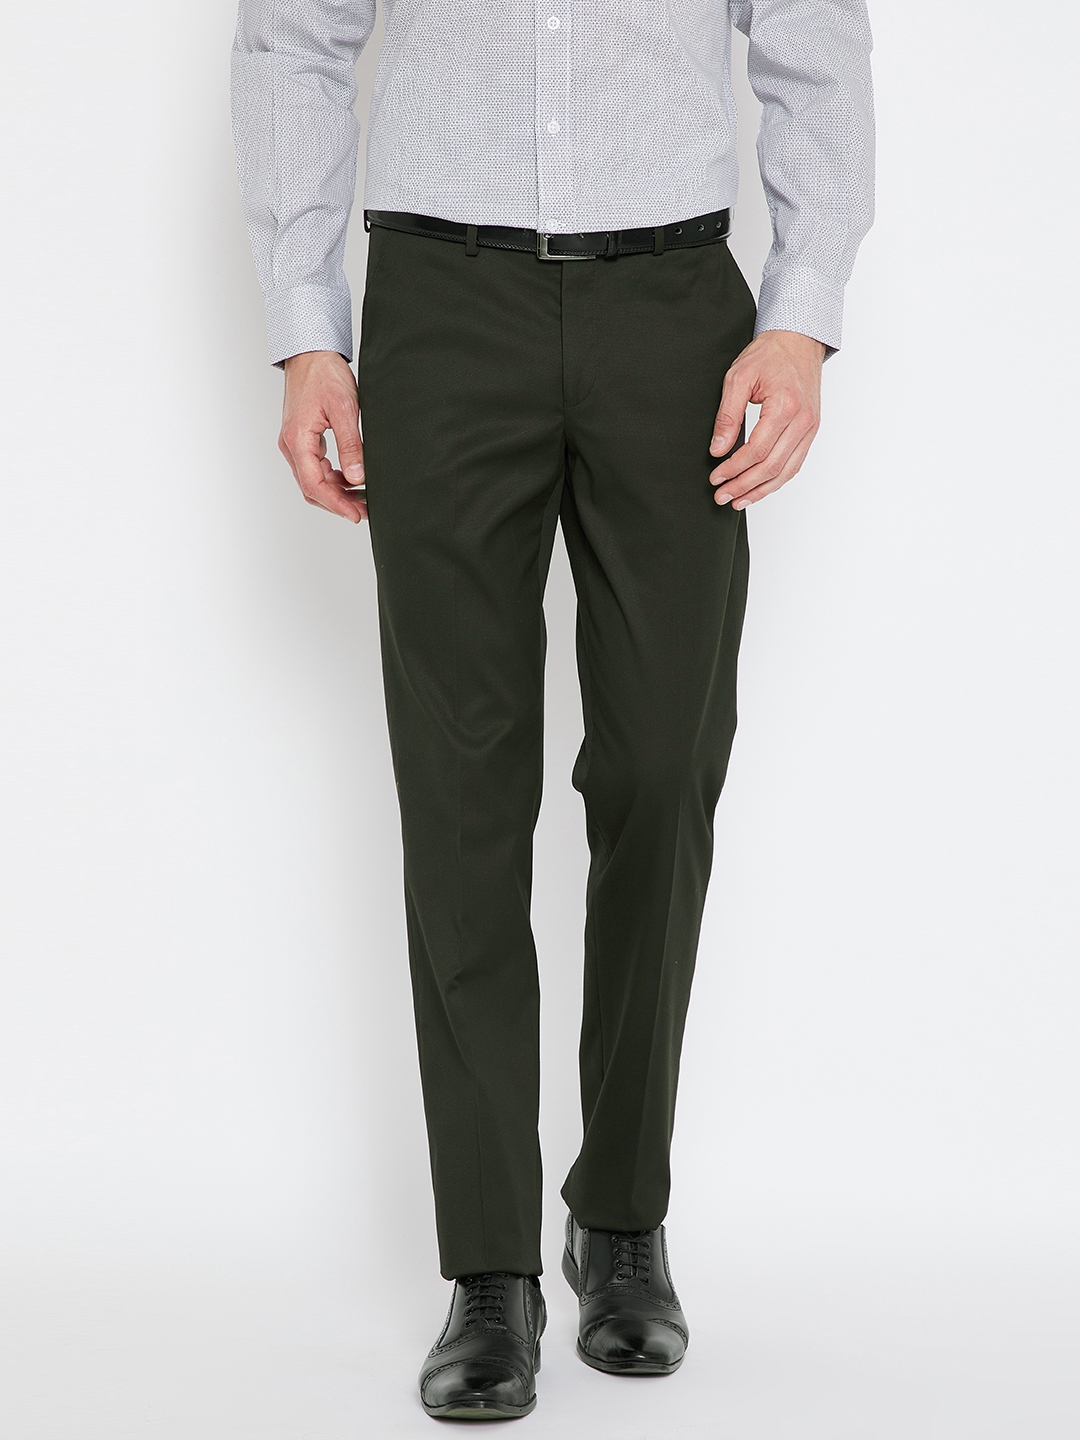 Buy Classic Regular Fit Trousers online  Looksgudin